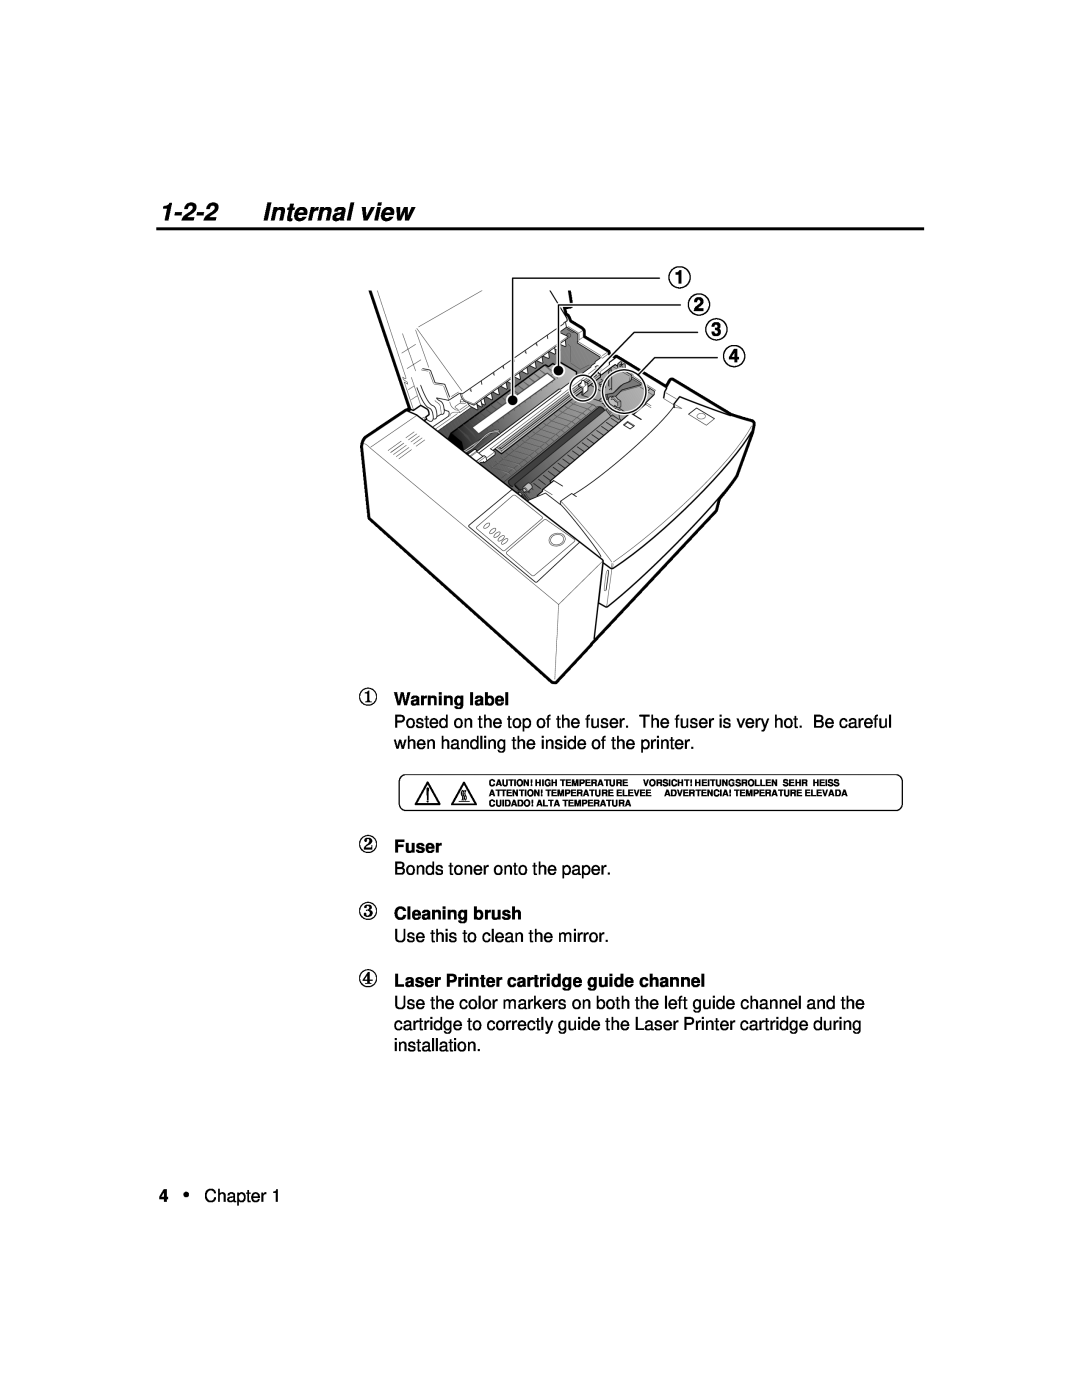 Xerox P12 manual Internal view, ① Warning label, Fuser, Cleaning brush, ④ Laser Printer cartridge guide channel 